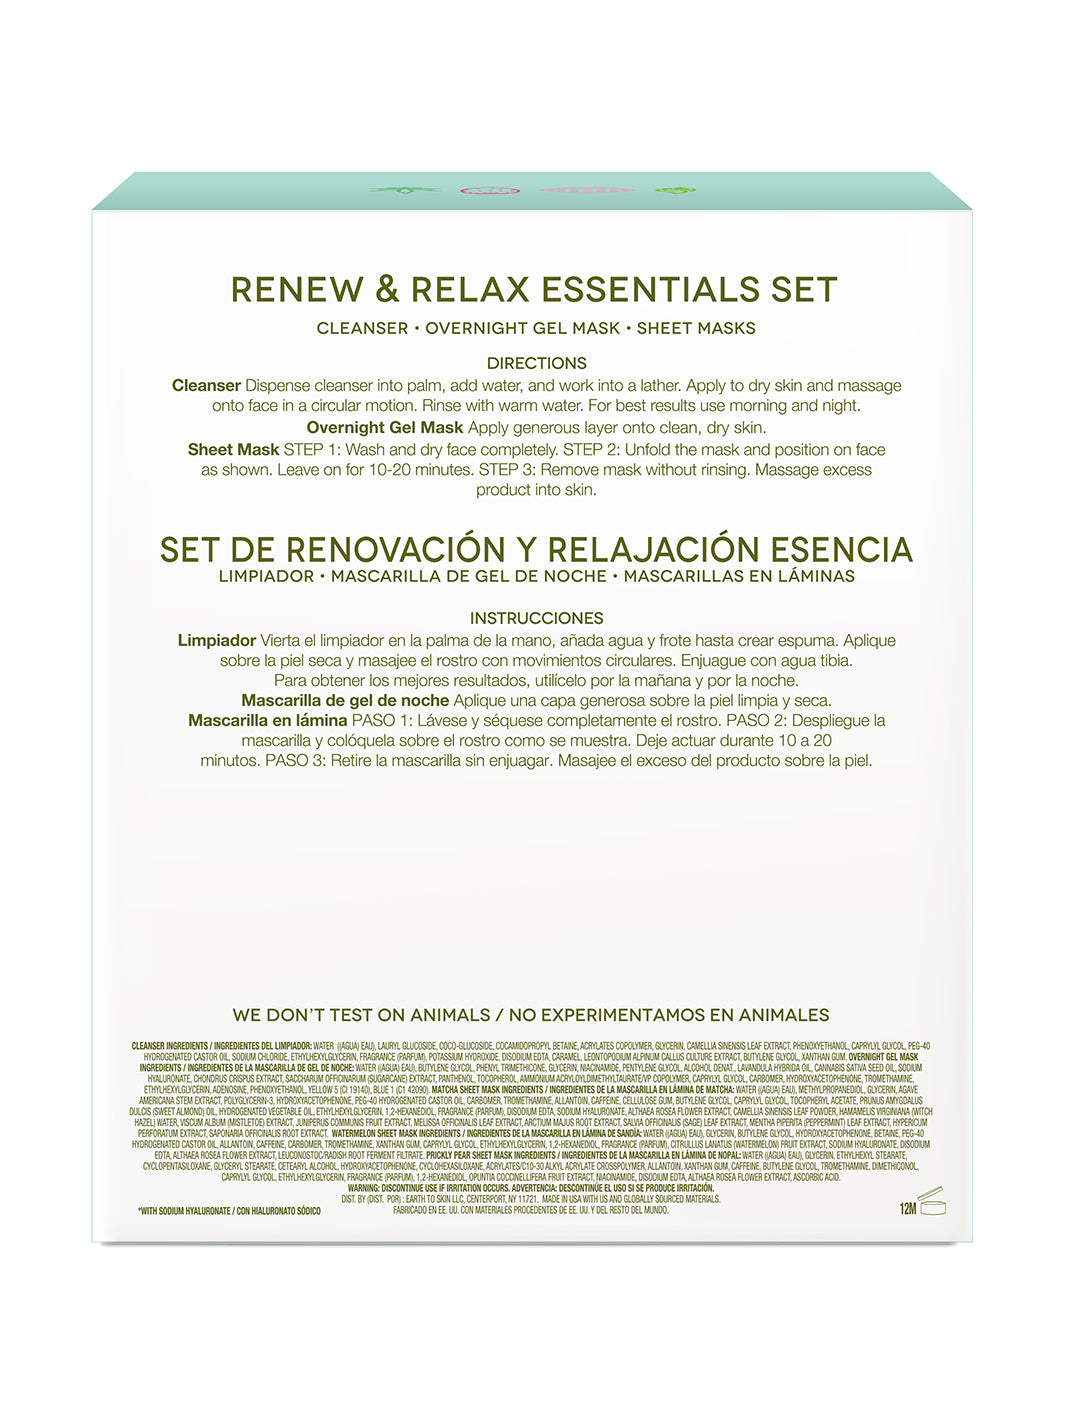 Renew & Relax Essentials Set